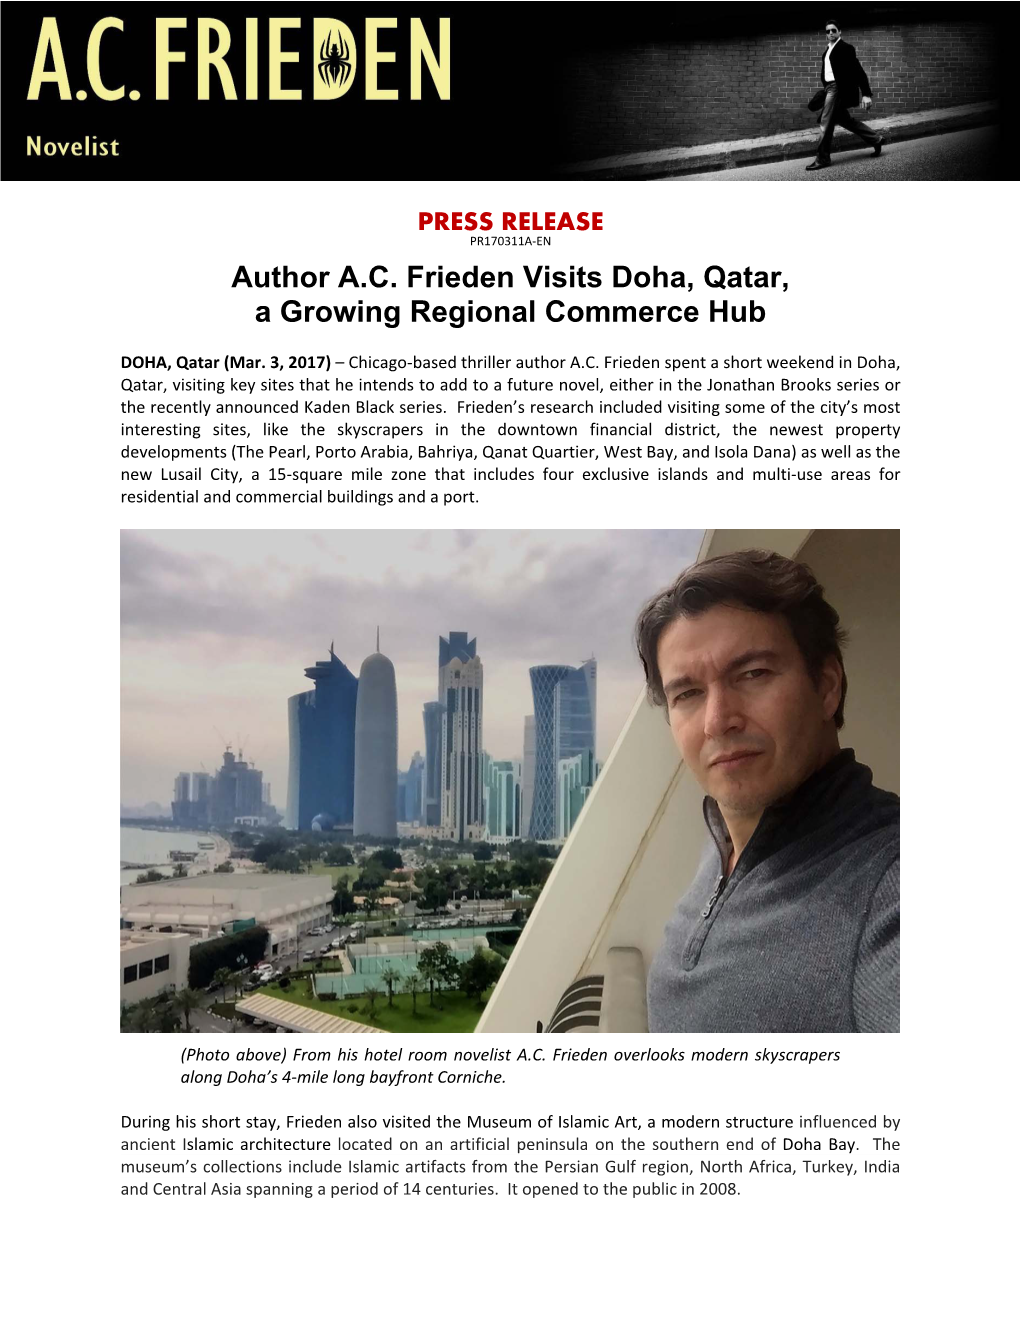 Author A.C. Frieden Visits Doha, Qatar, a Growing Regional Commerce Hub